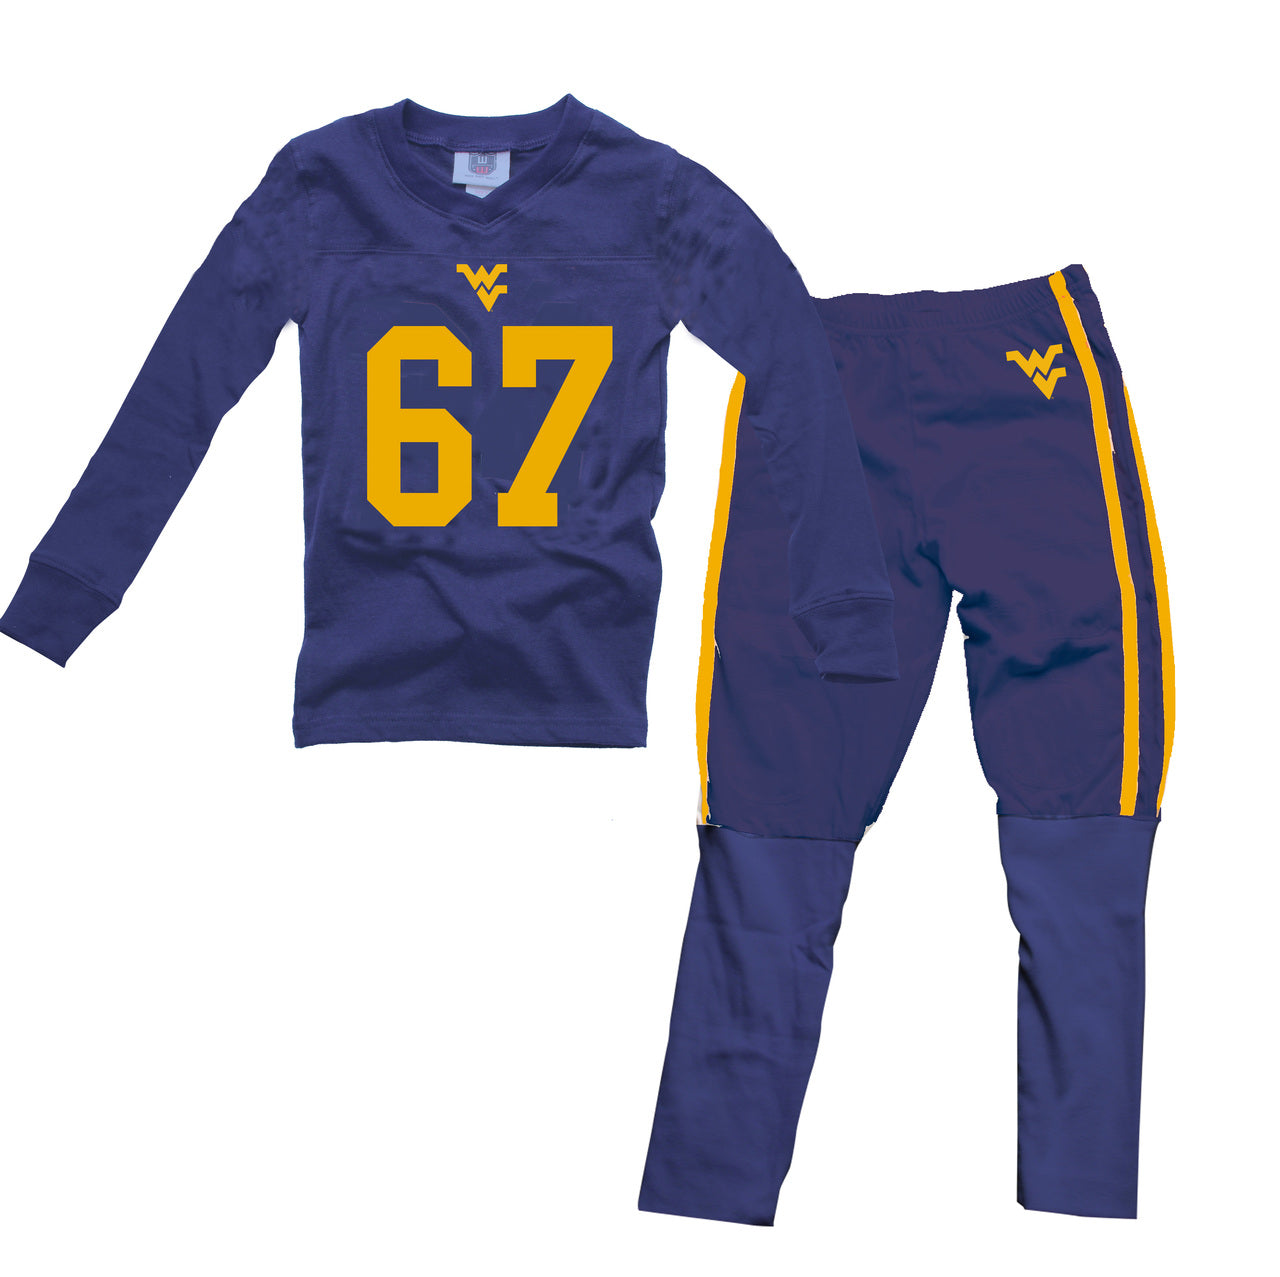 Wes & Willy Boy's West Virginia Mountaineers Football Pajamas